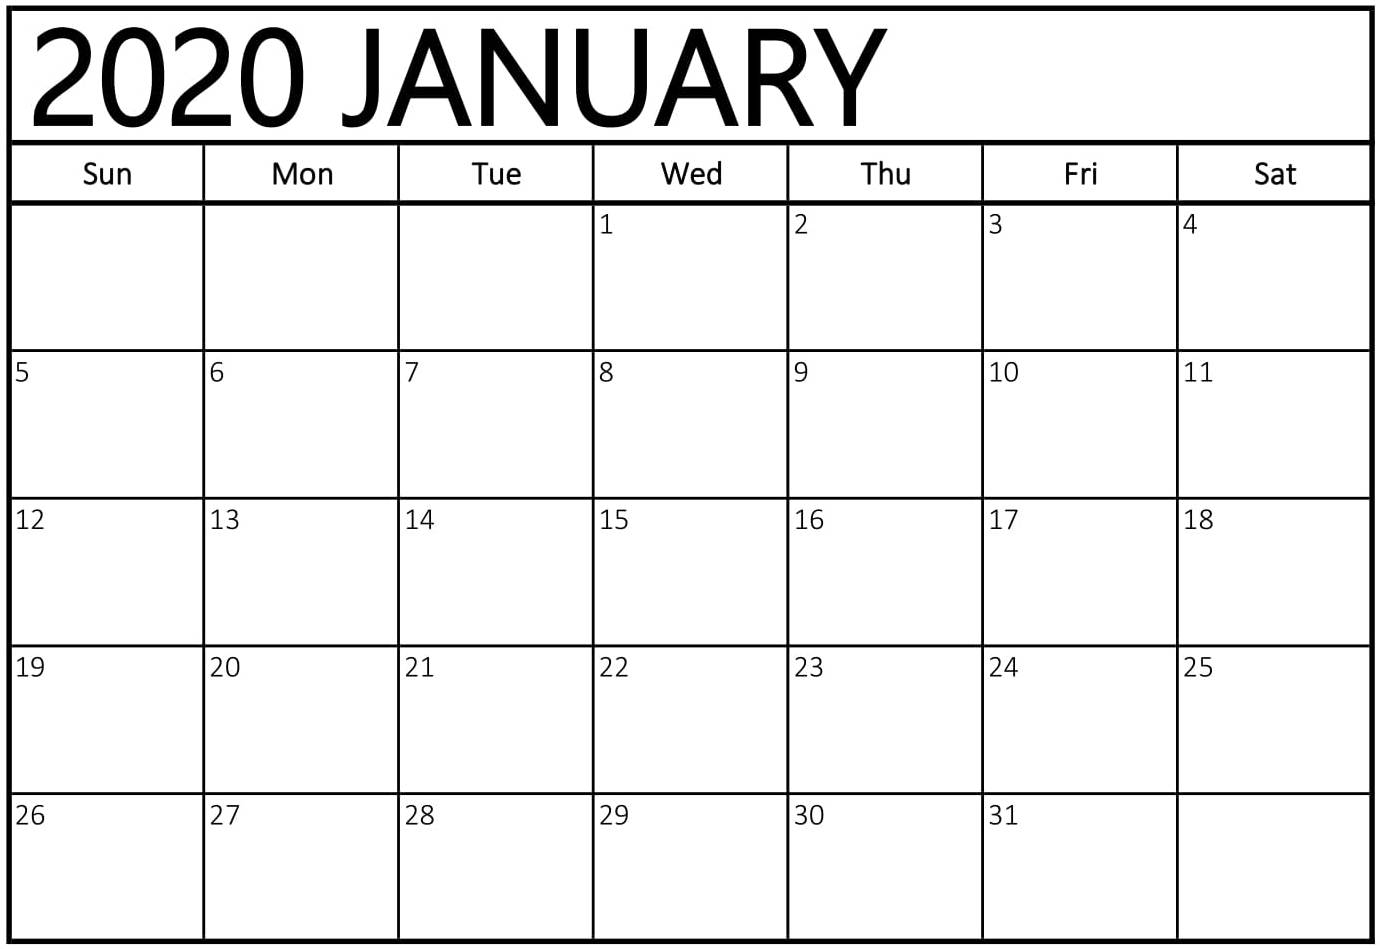 January 2020 Calendar Nz Printable With Holidays - Set Your